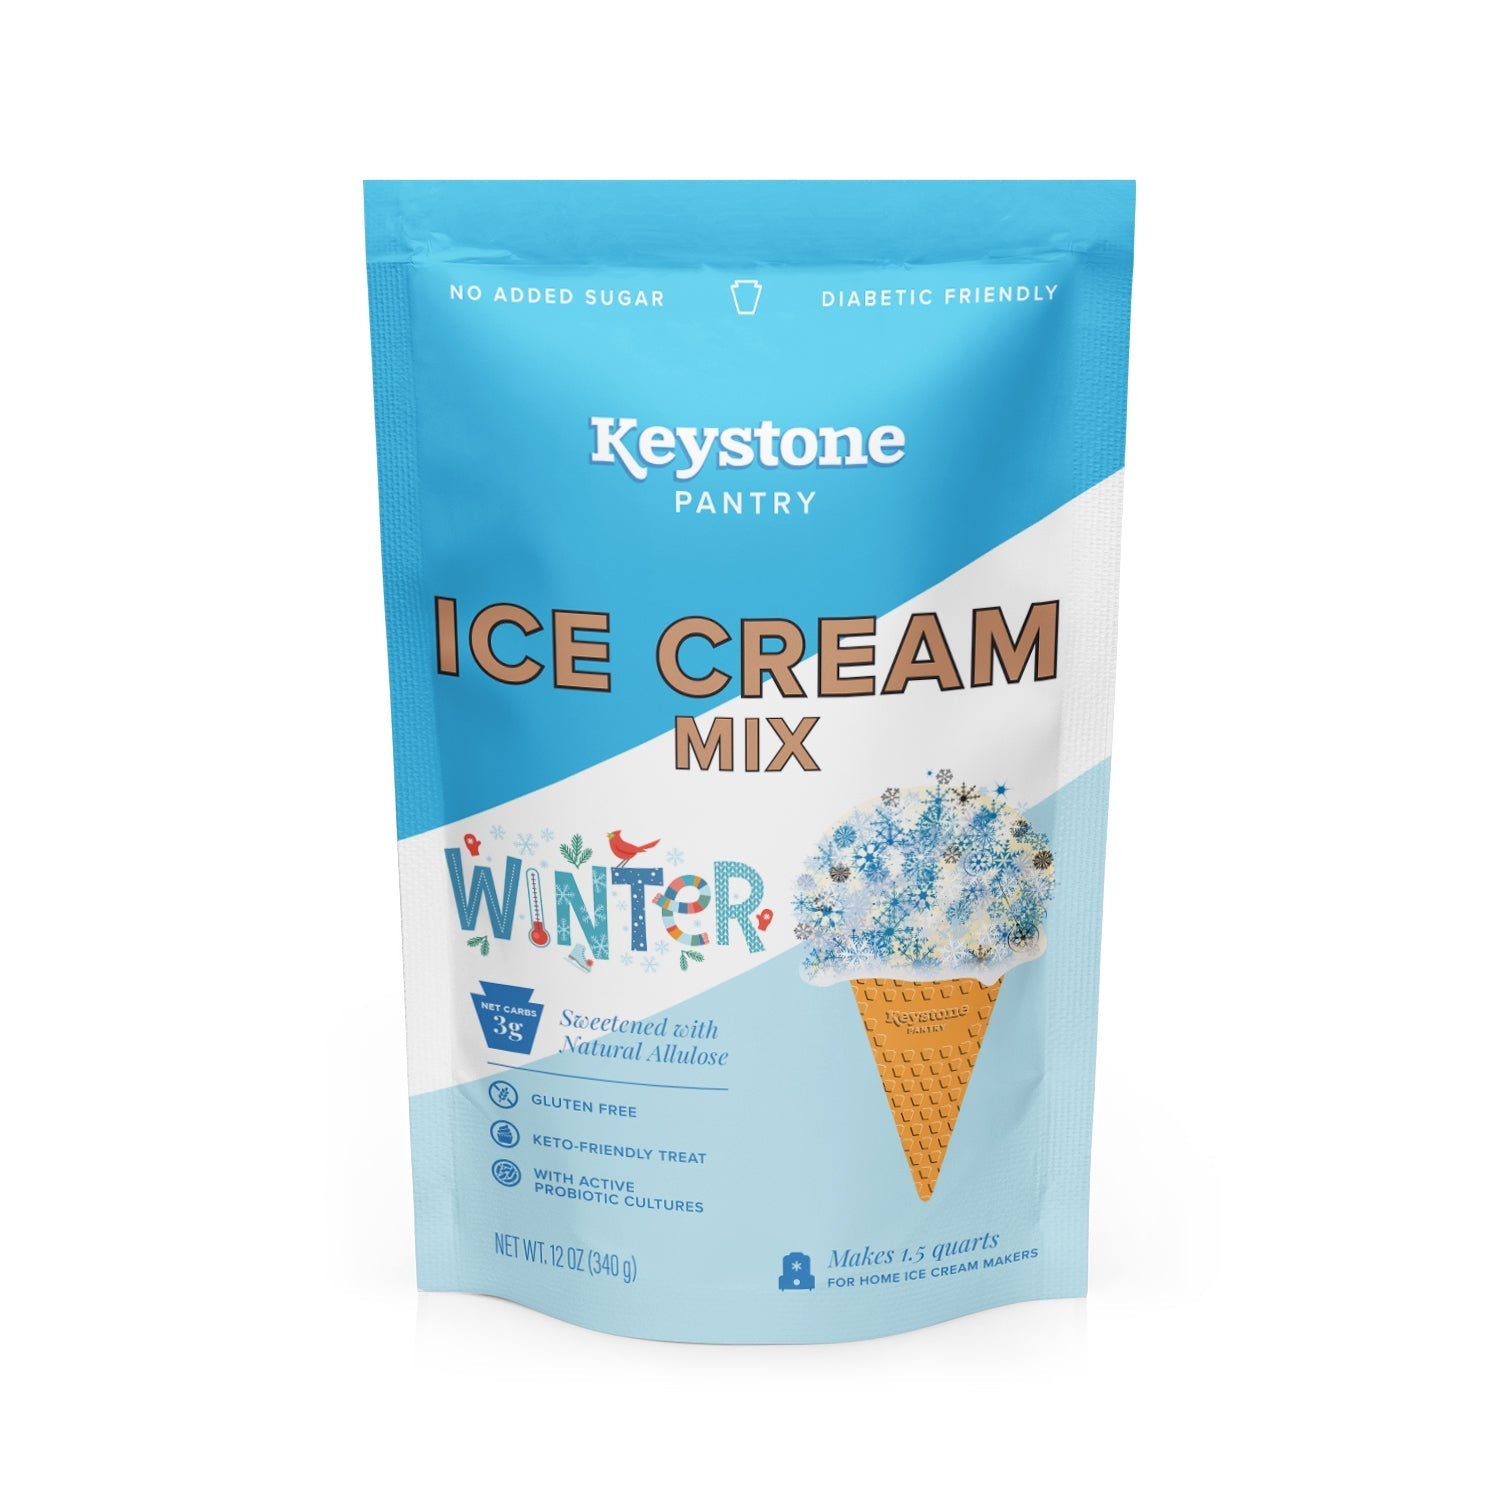 Keystone Pantry Keto Ice Cream Mix Candy Cane Diabetic Friendly